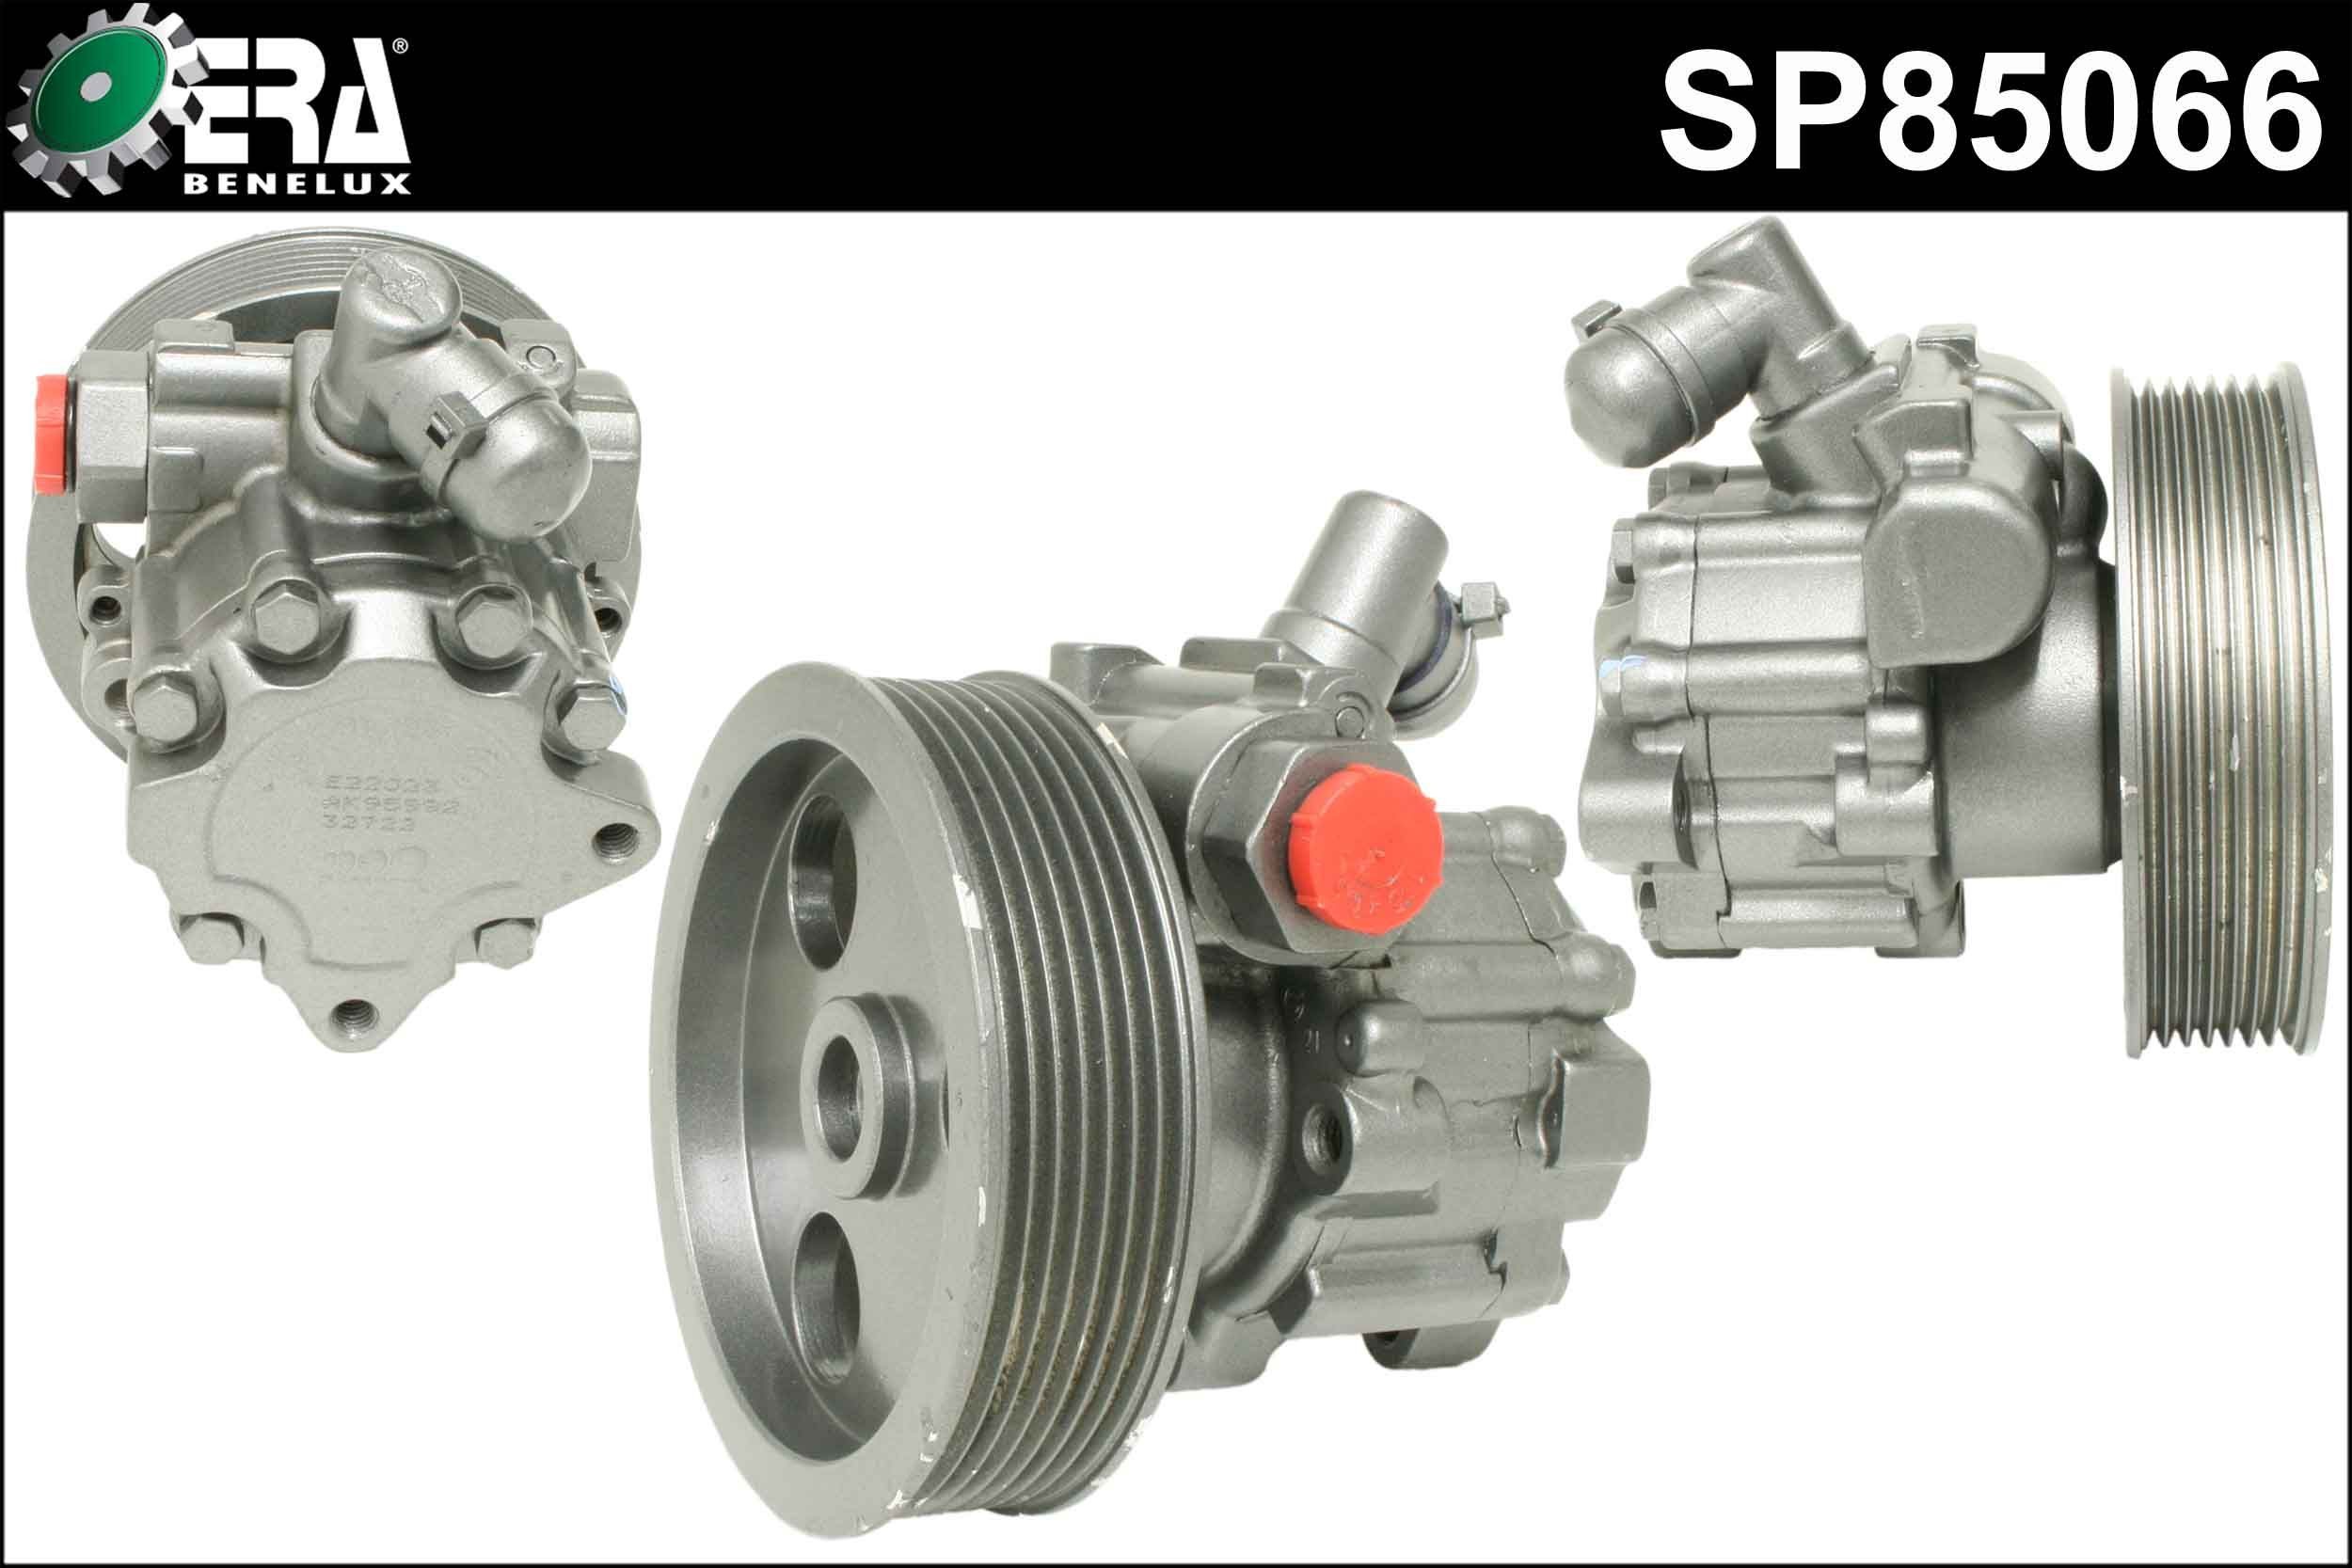 Mercedes-Benz GLK Power steering pump ERA Benelux SP85066 cheap